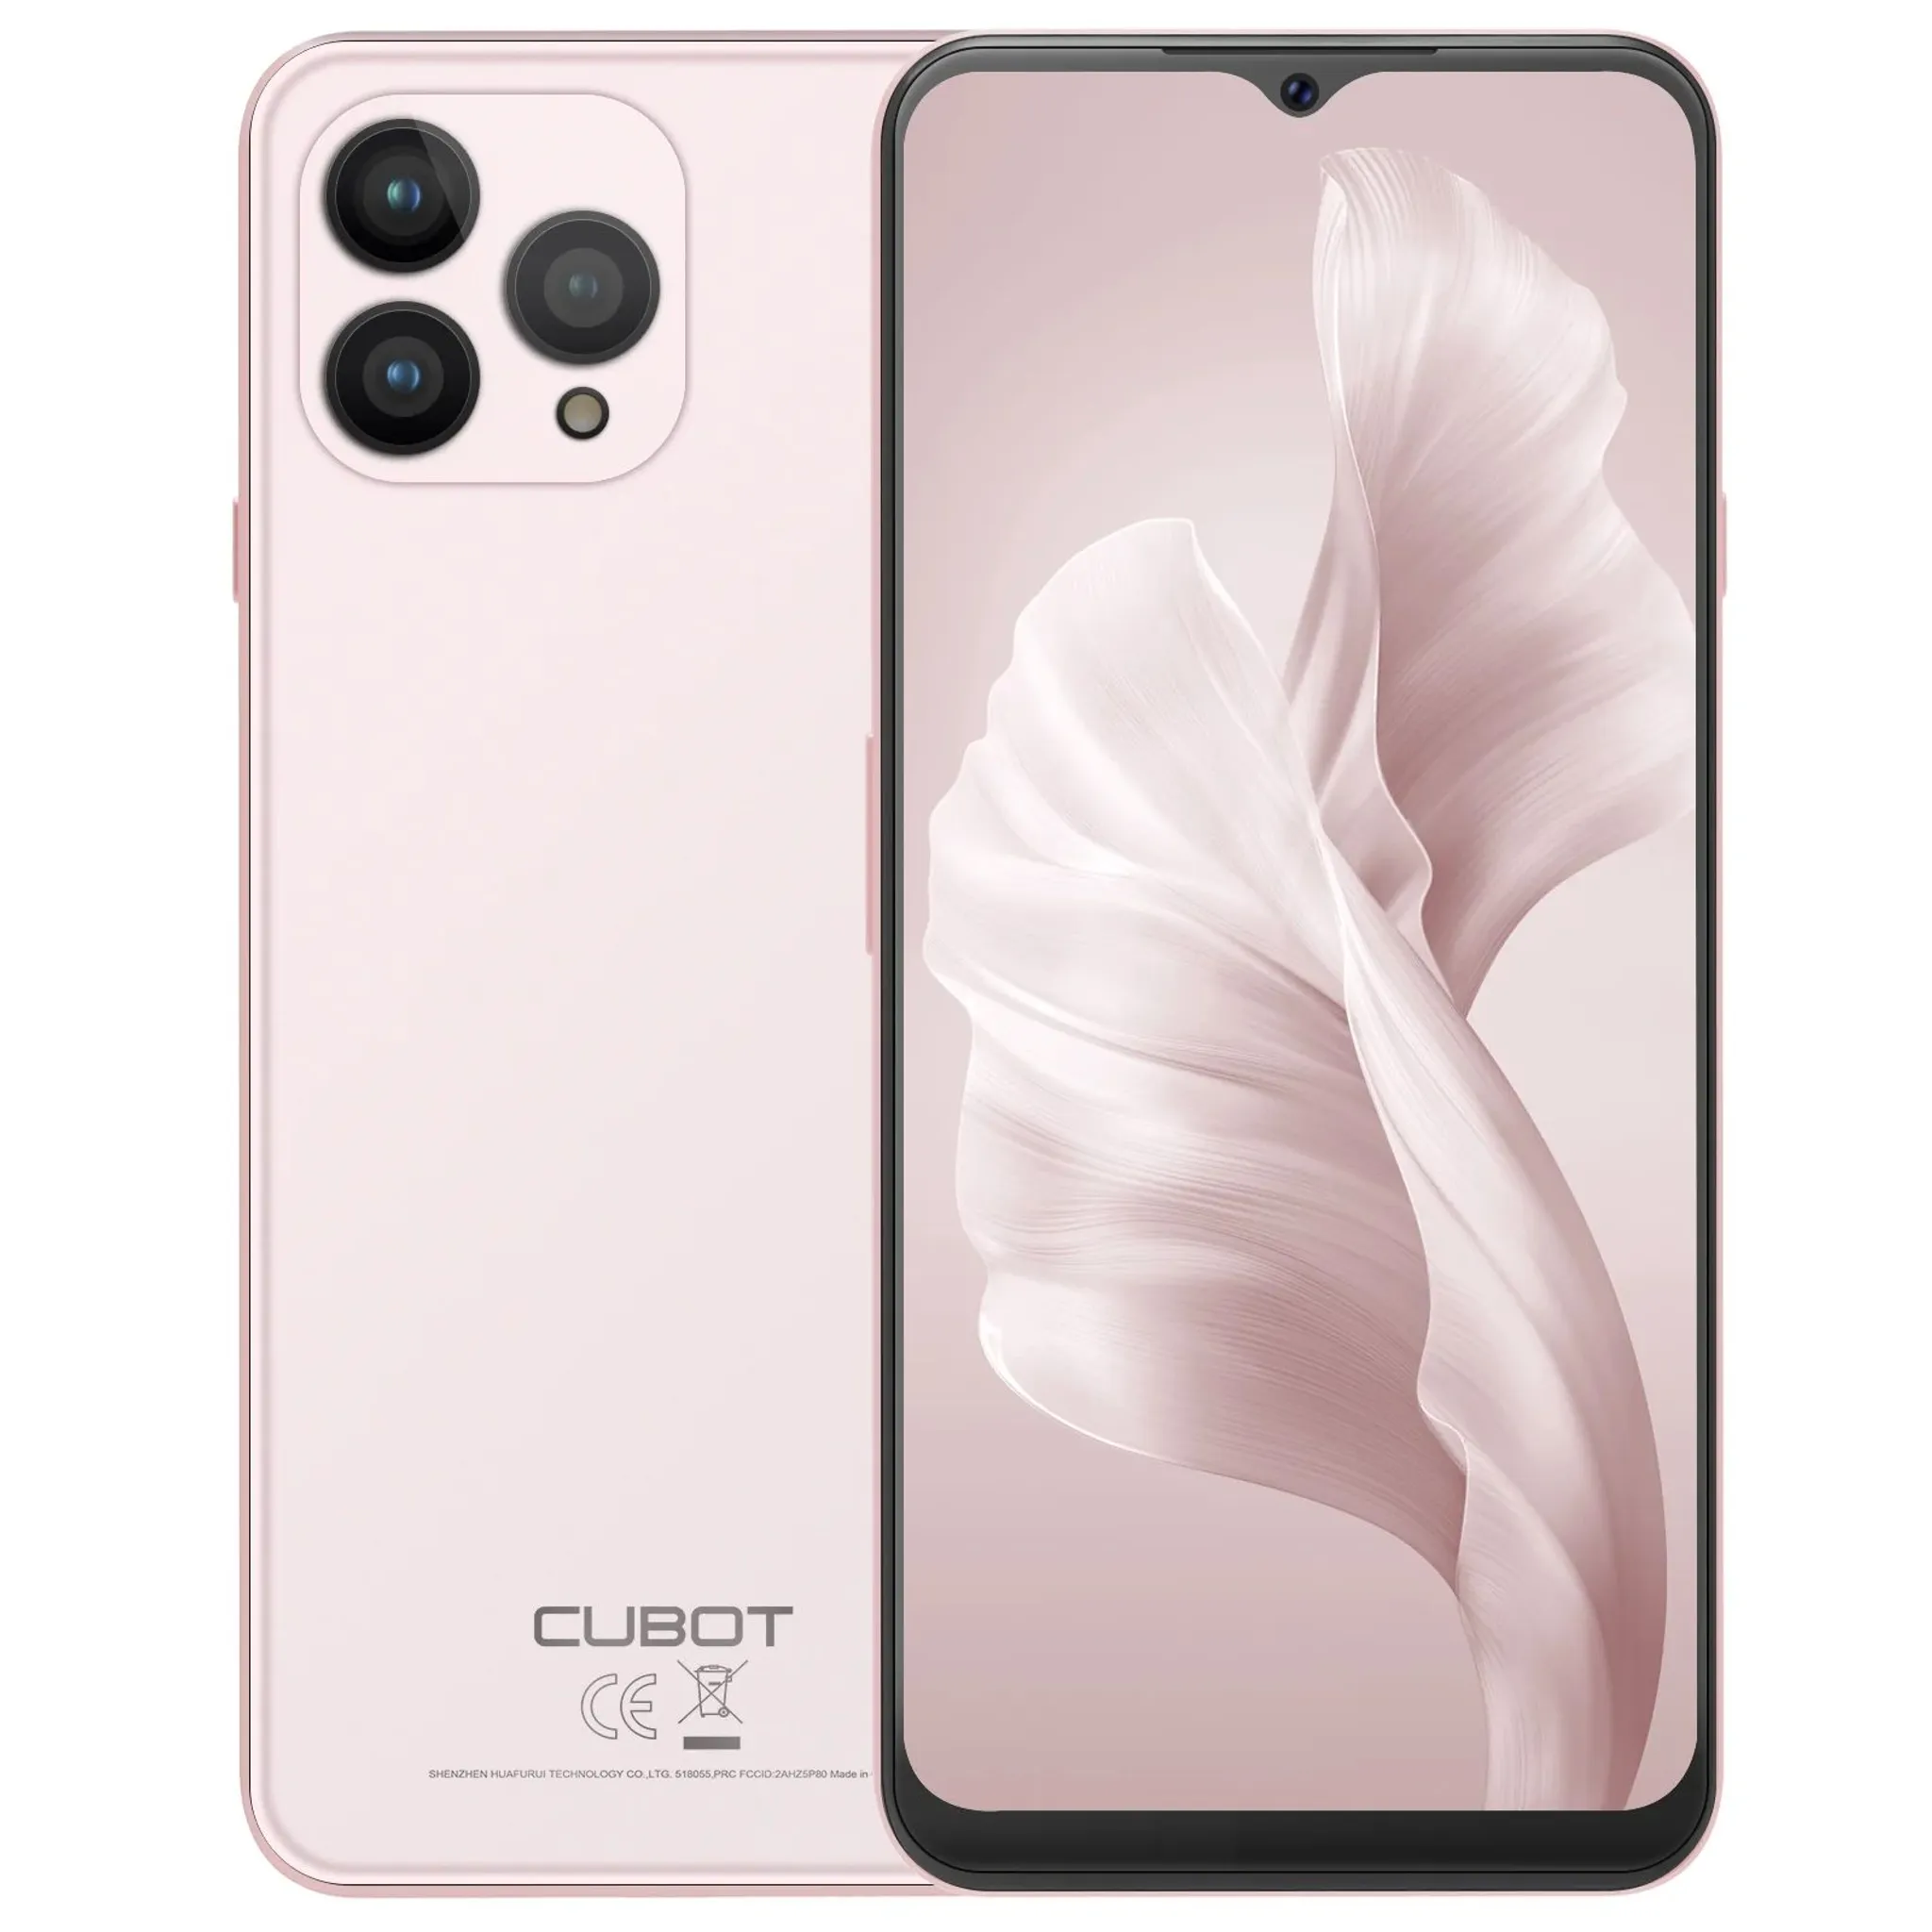 Cubot P80 512 GB Pink, GB 16 Smartphone, RAM